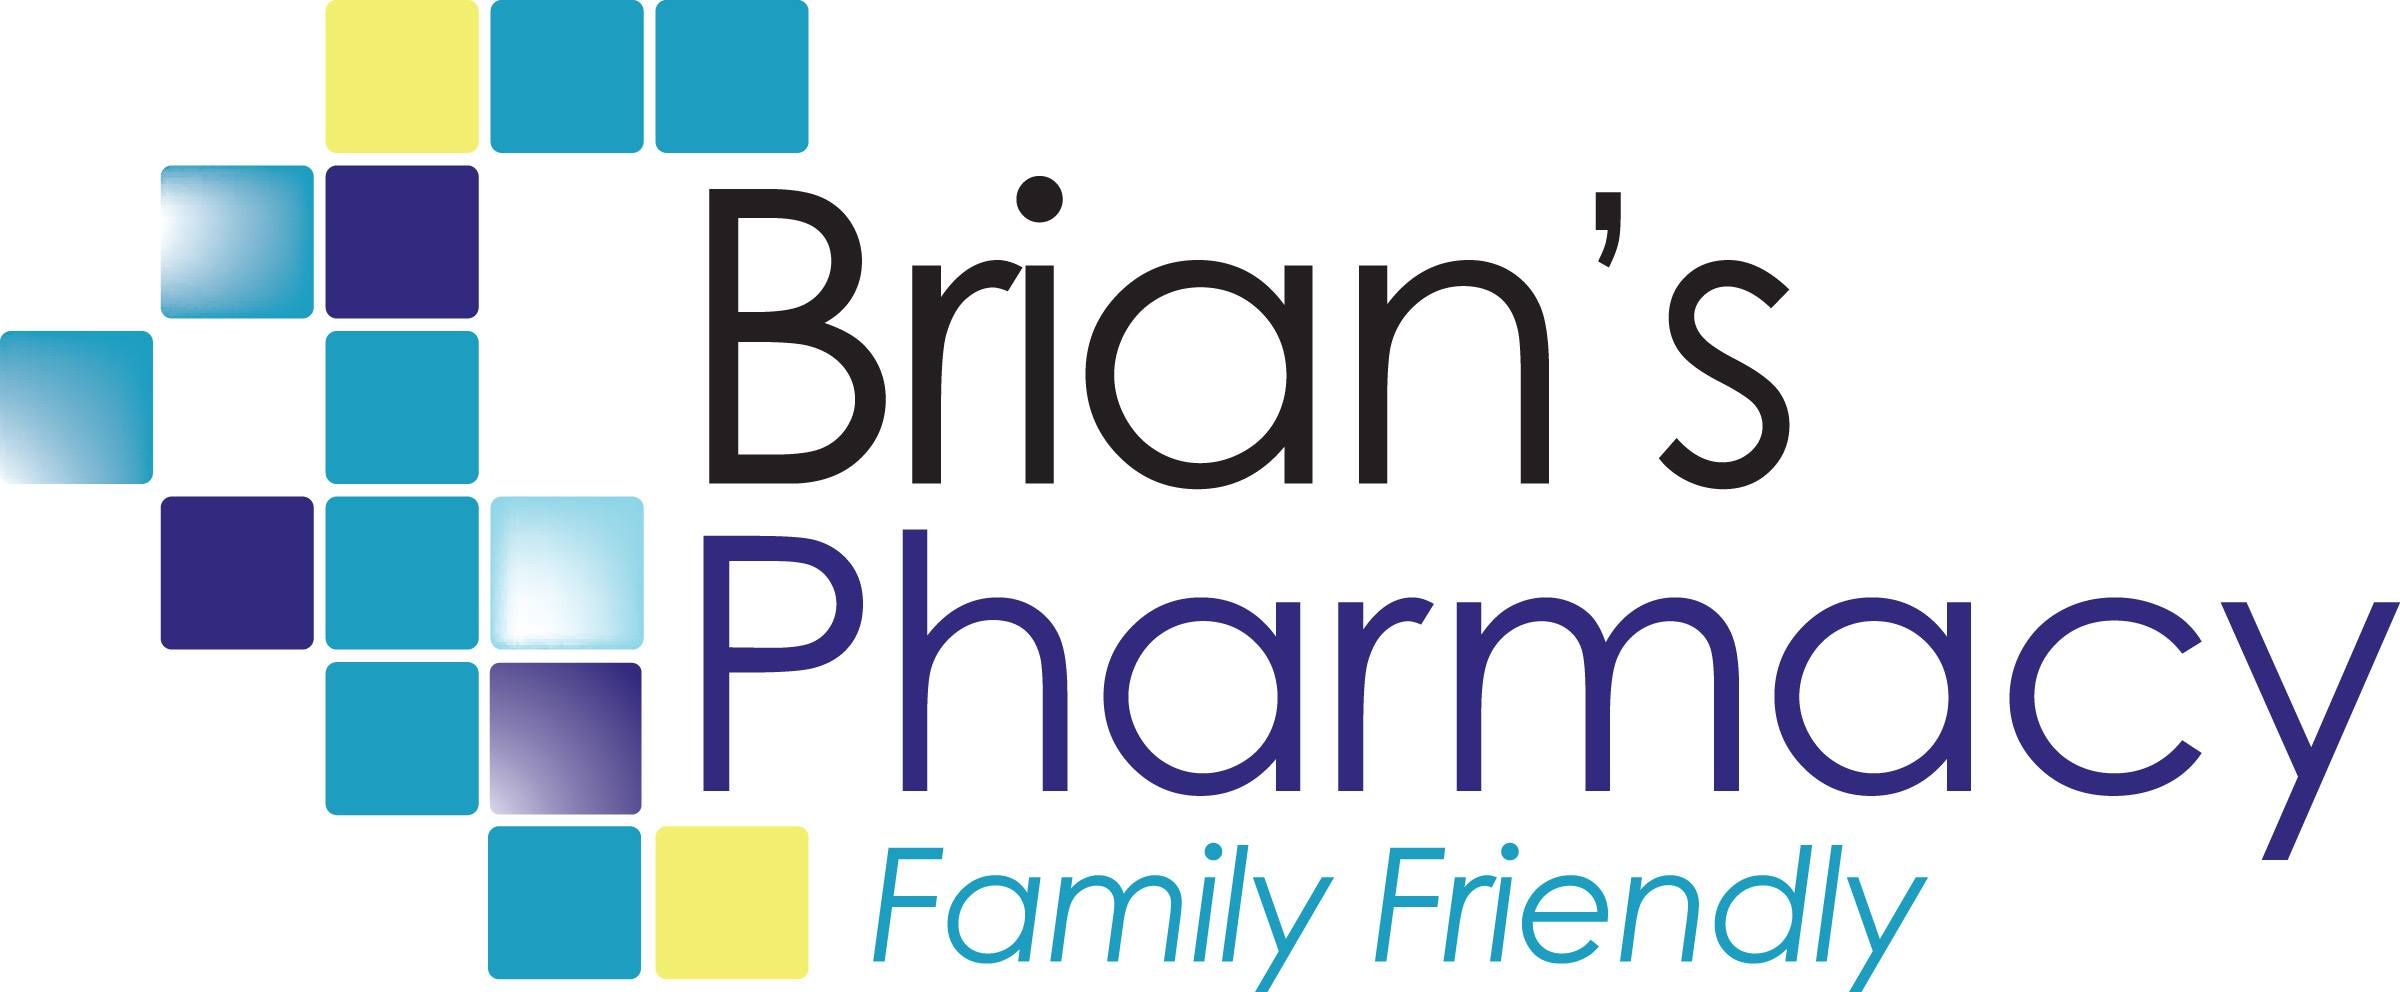 Brian's Pharmacy